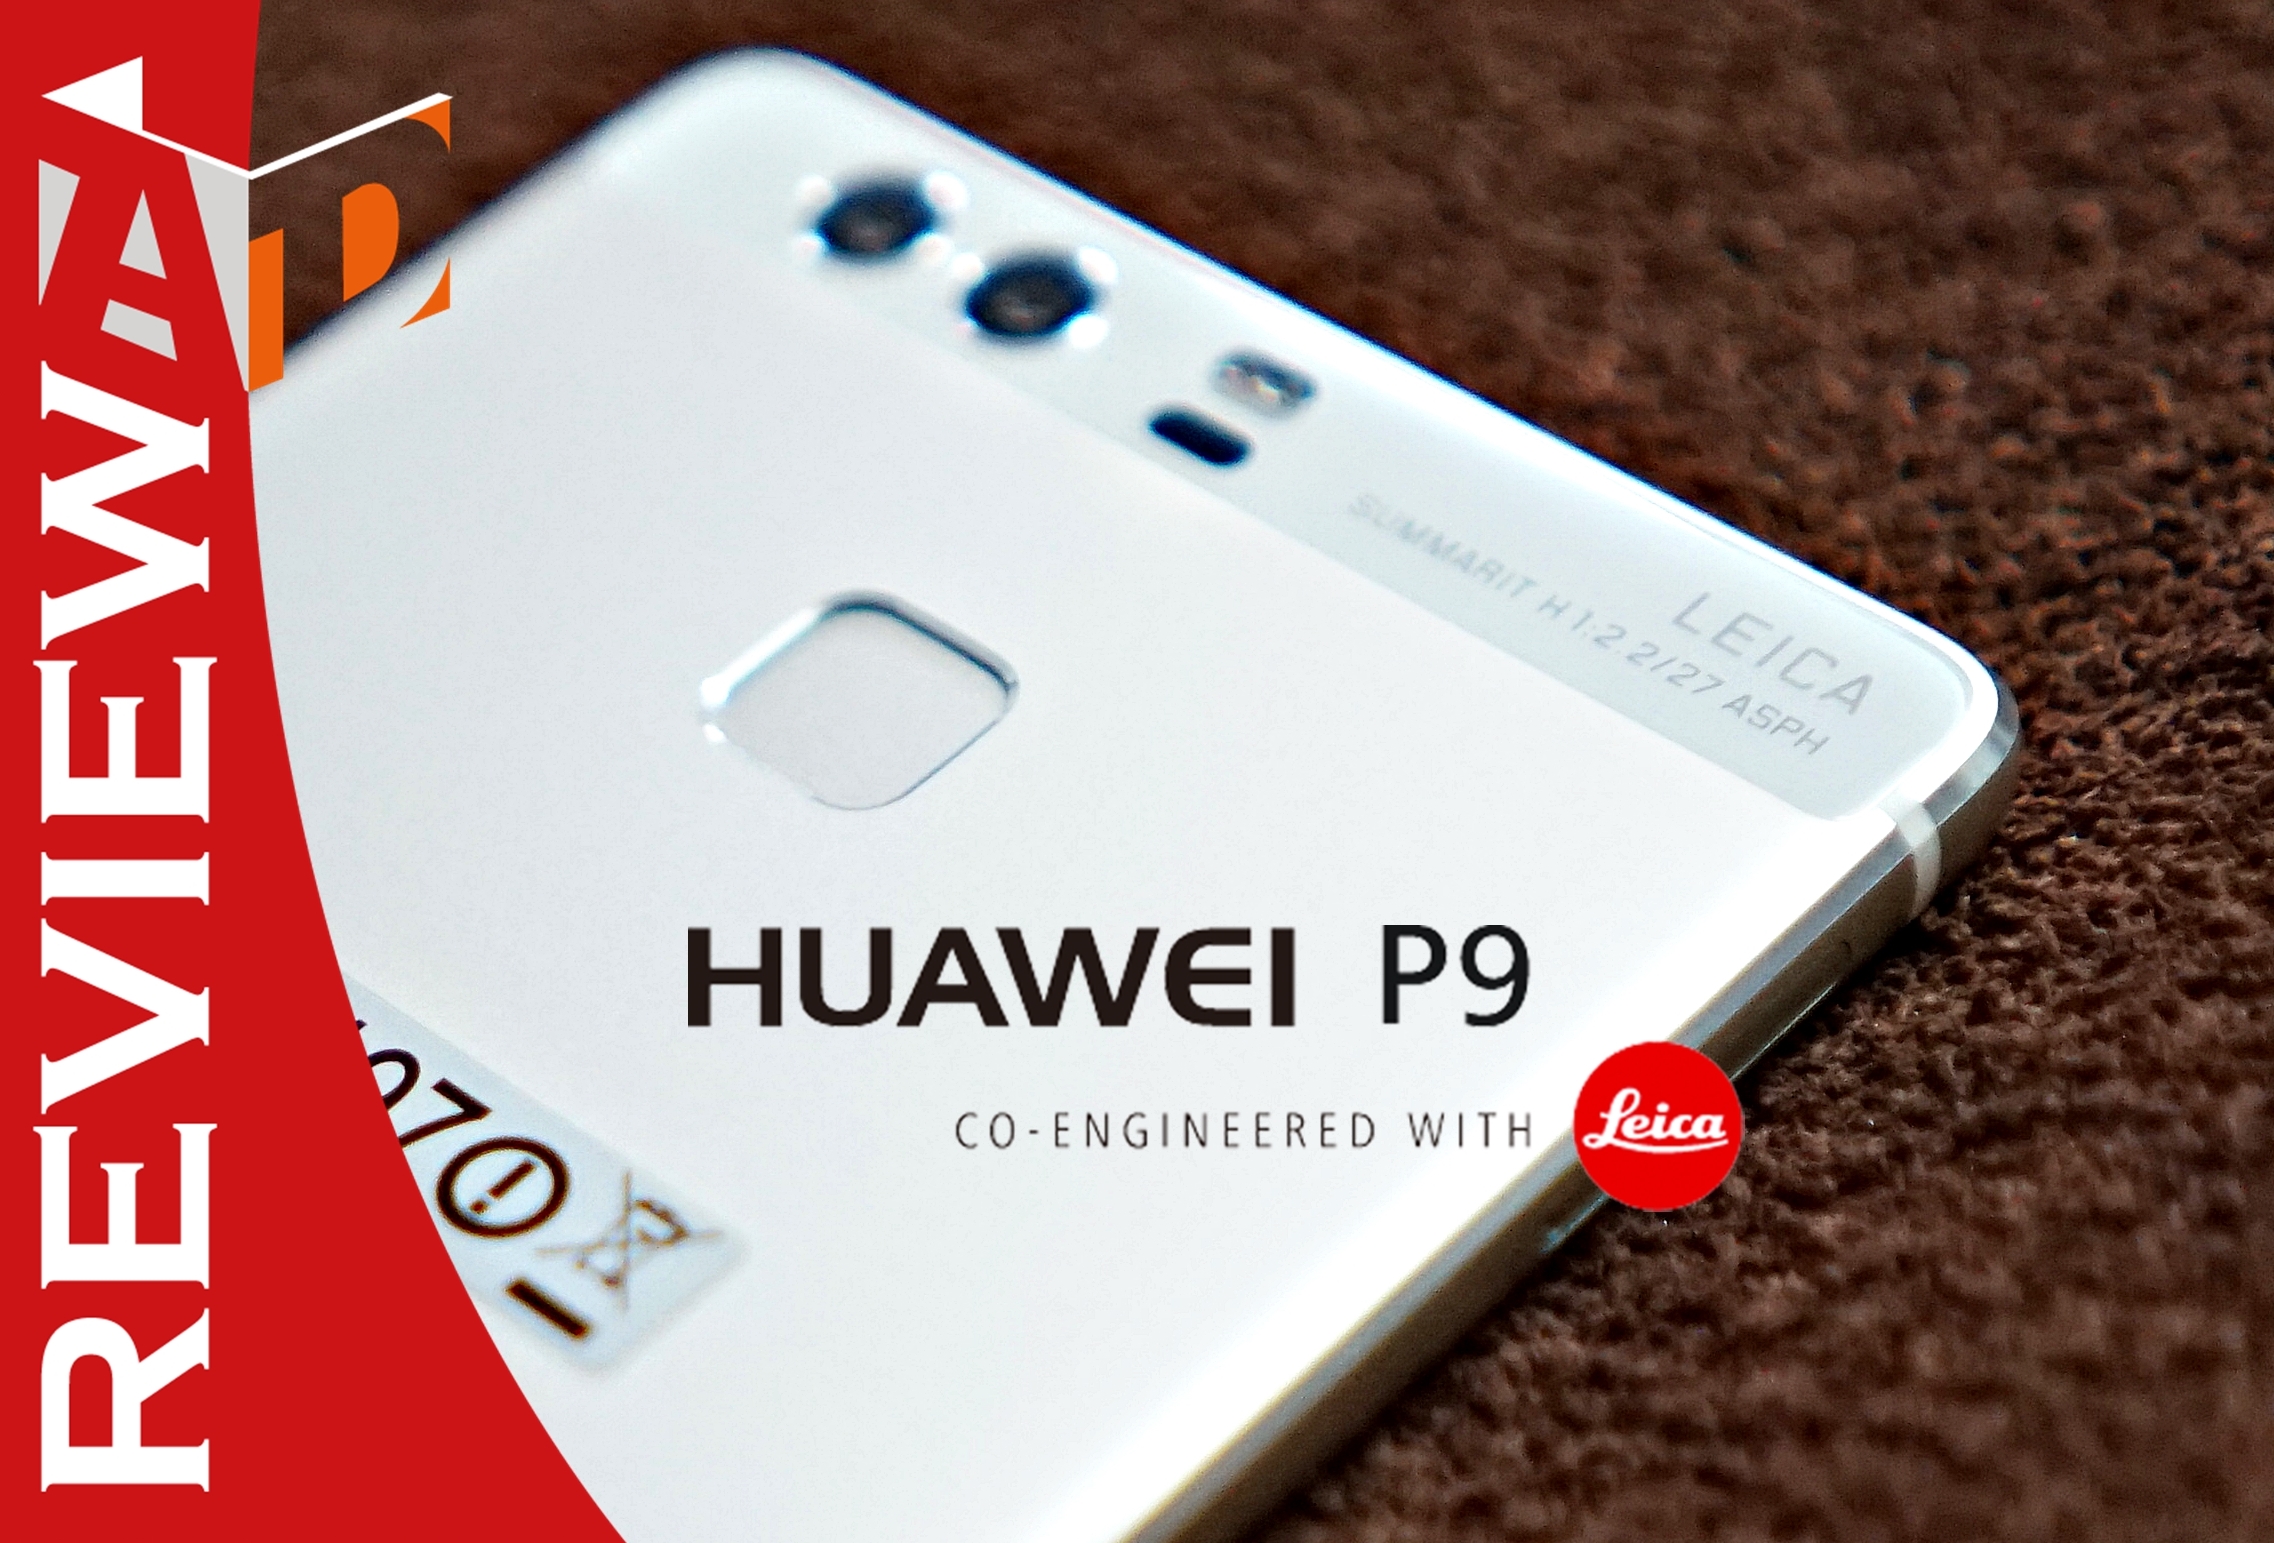 review Huawei p9 leica | Android | รีวิว Huawei P9 สมาร์ทโฟนกล้องคู่ มาตรฐานจาก Leica